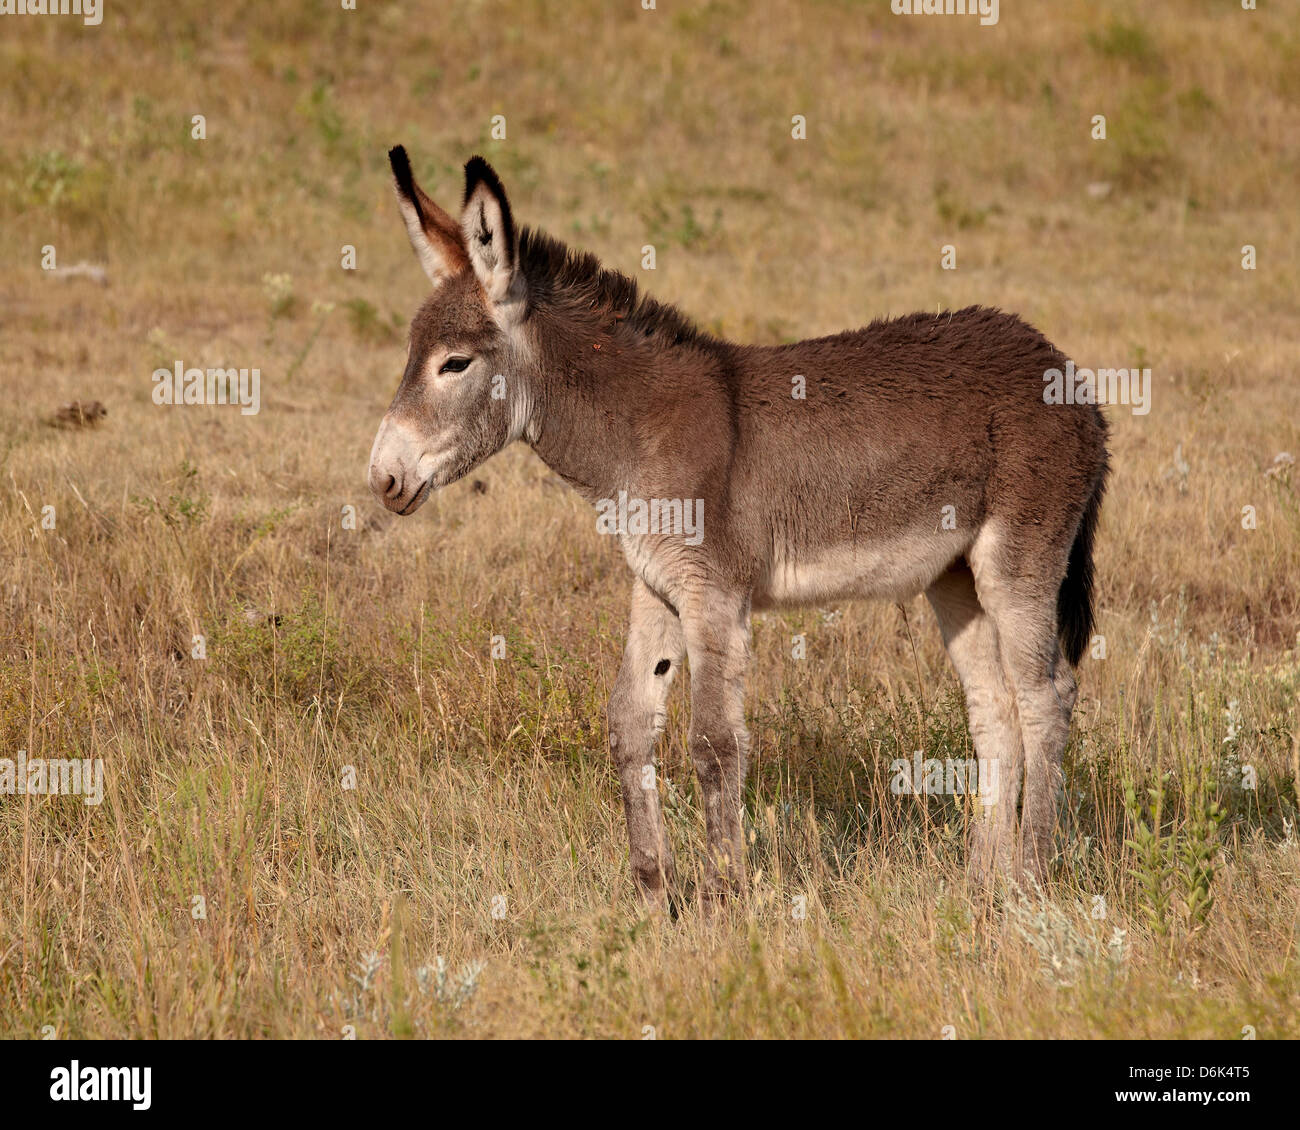 Young wild burro (donkey) (Equus asinus) (Equus africanus asinus), Custer State Park, South Dakota, USA Stock Photo